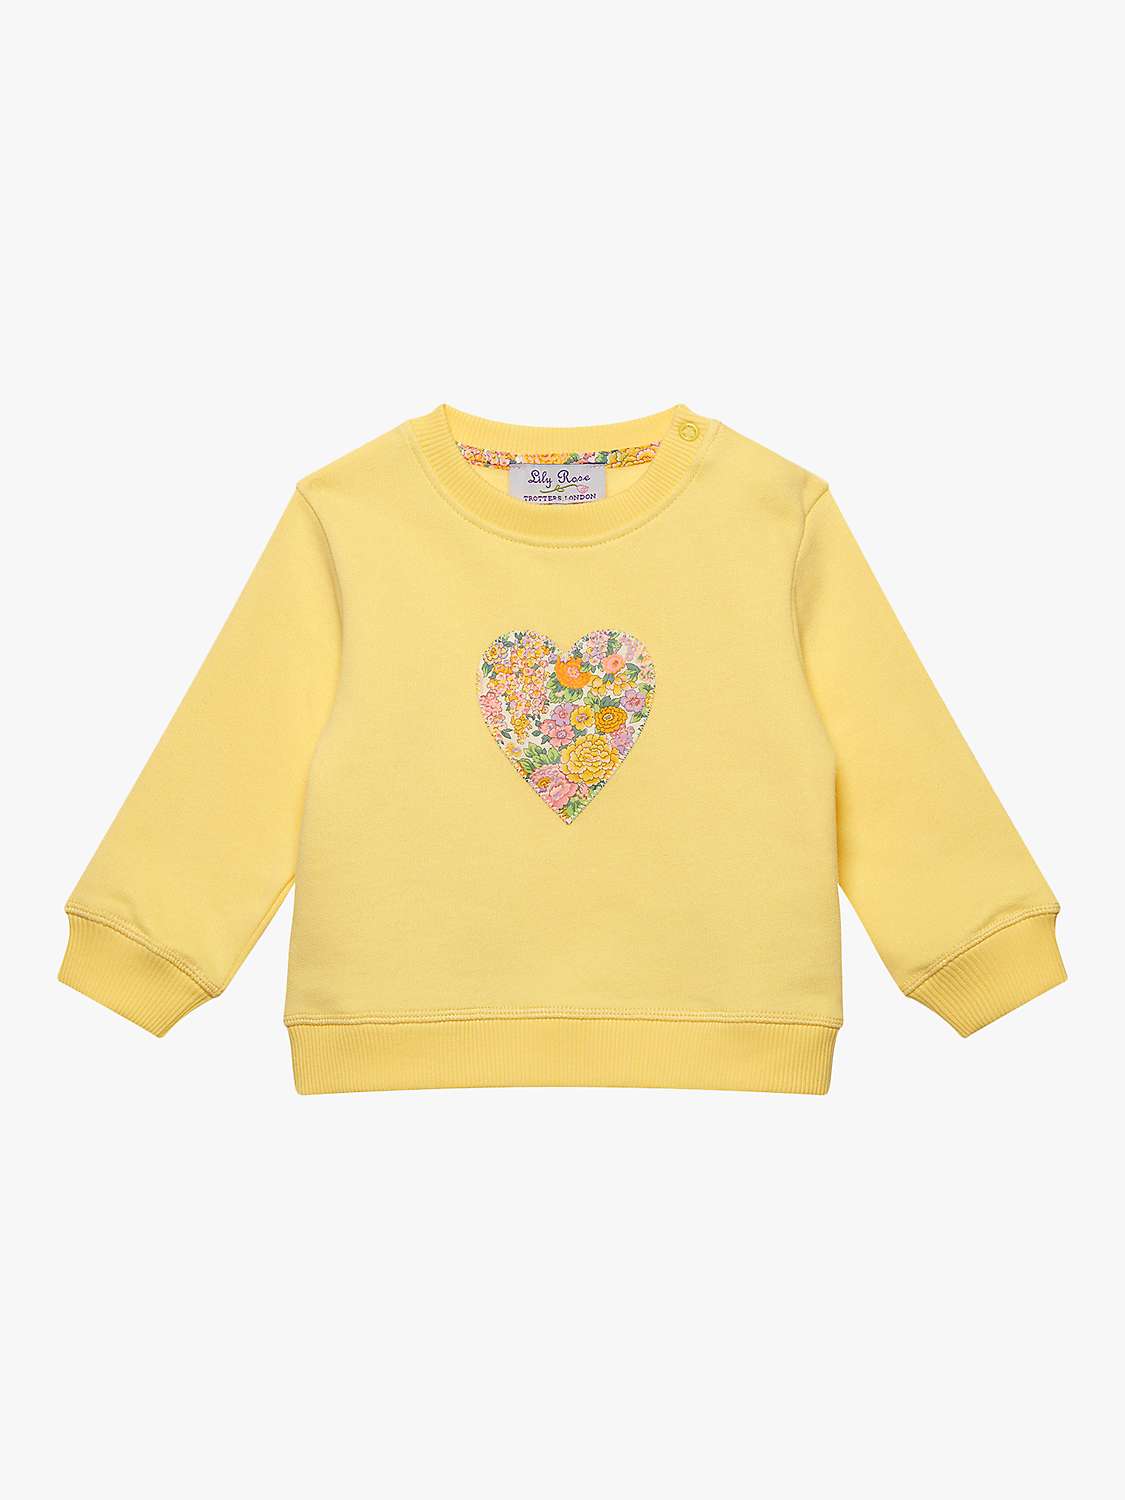 Buy Trotters Baby Elysian Day Applique Heart Sweatshirt, Lemon/Multi Online at johnlewis.com